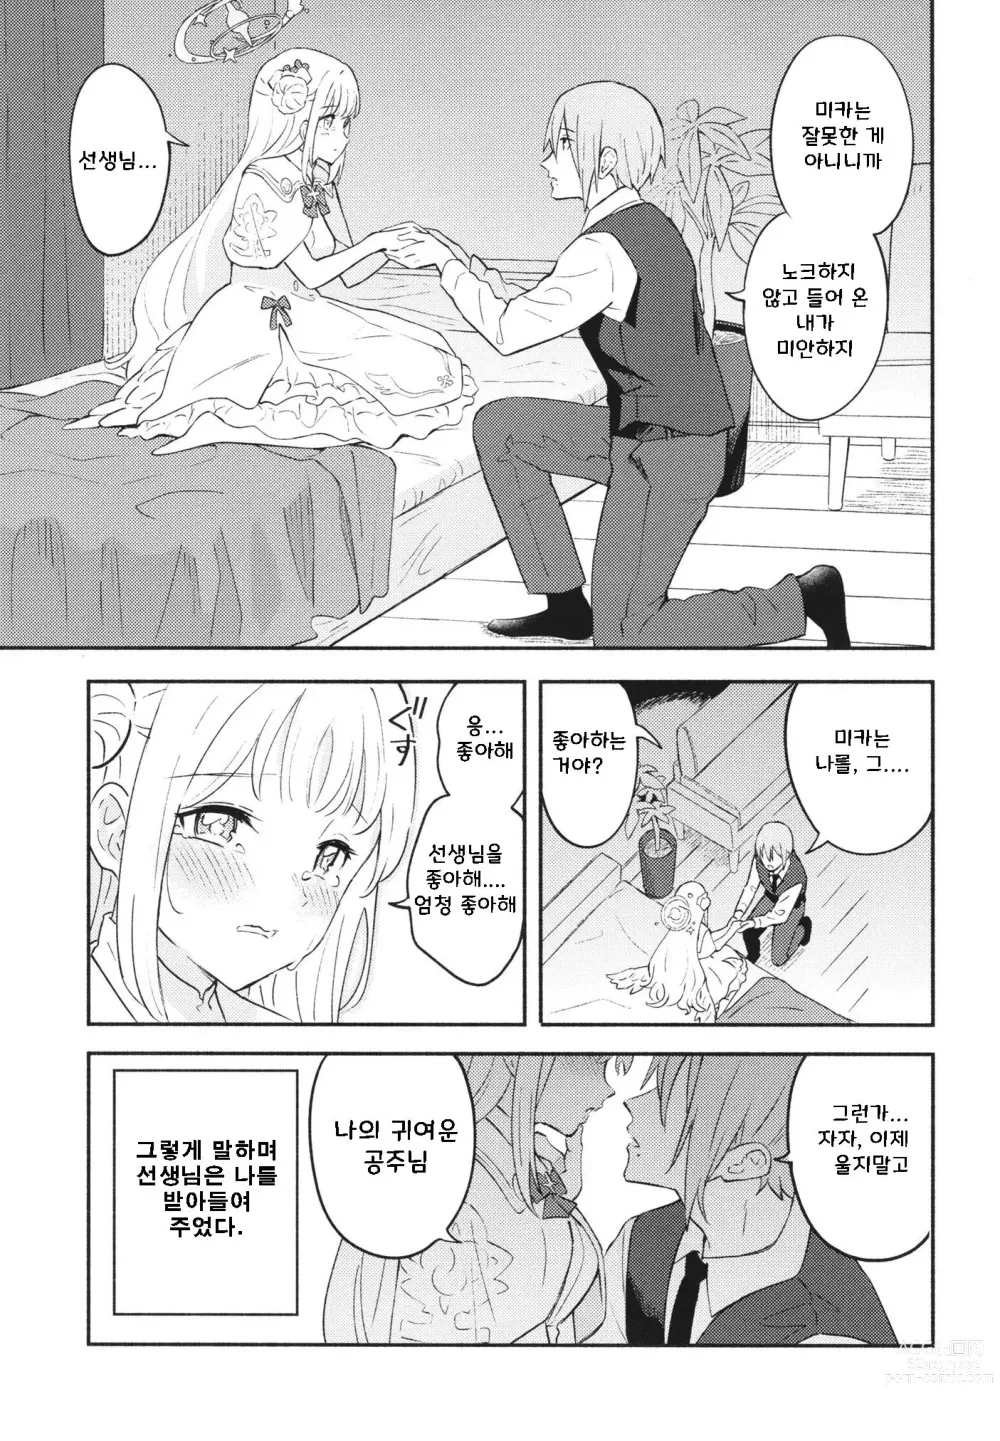 Page 4 of doujinshi 미소노 미카는 선생님에게 너무 사랑 받는다